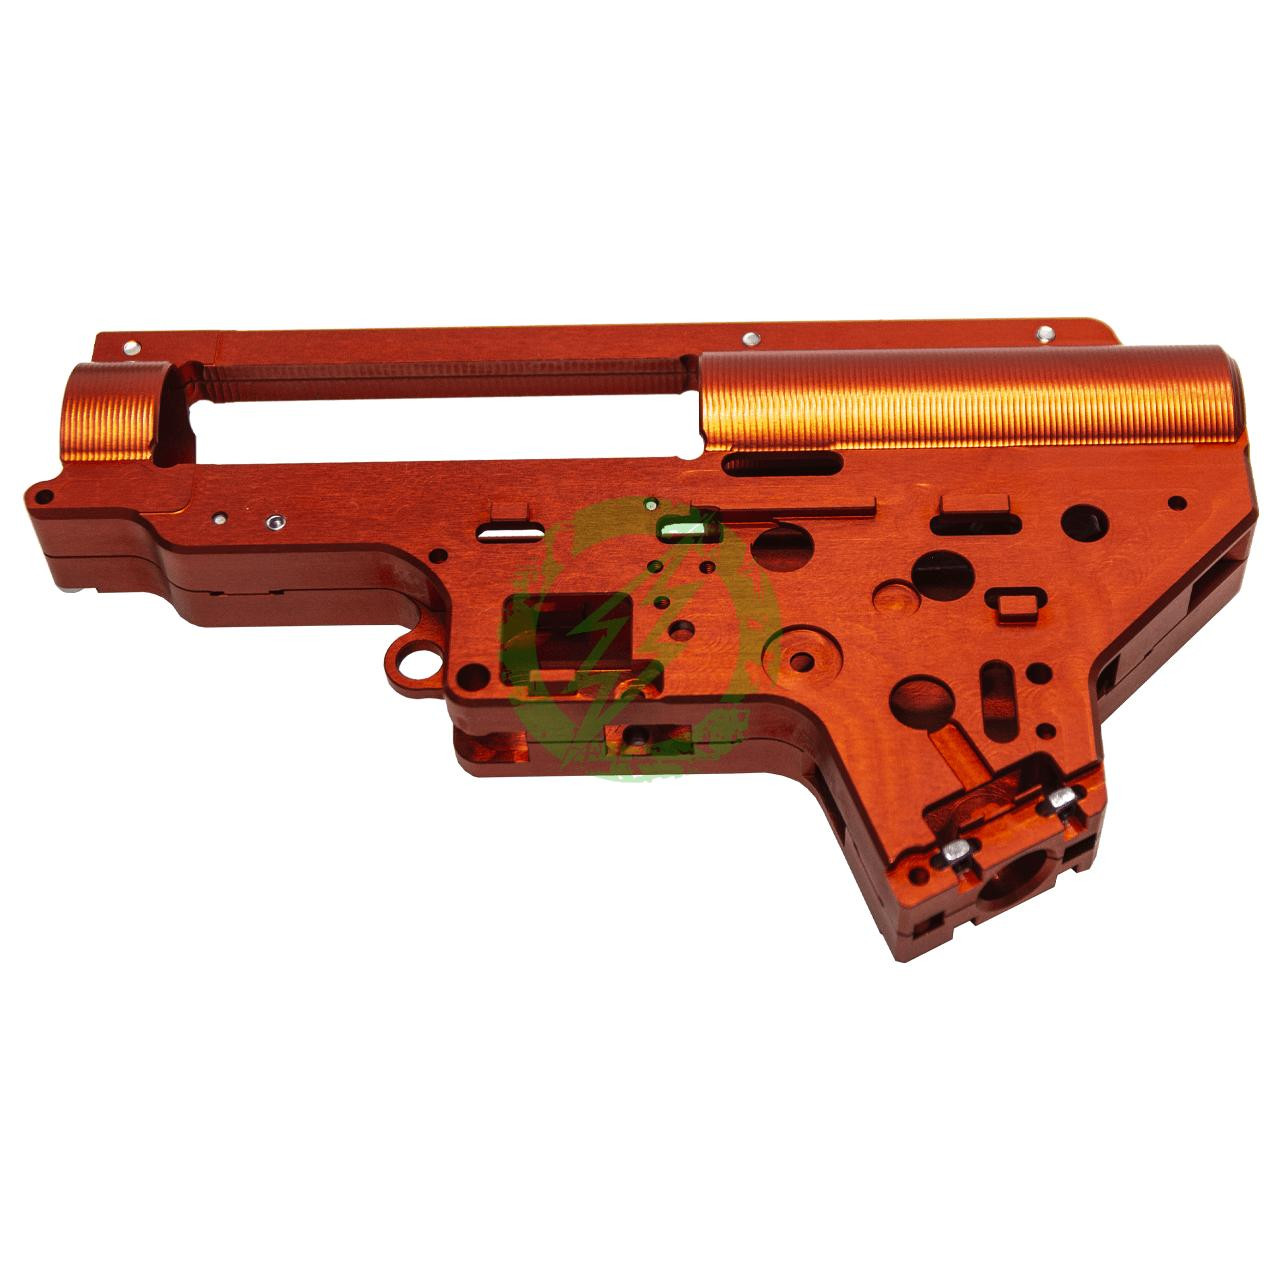  ManCraft CNC Gearbox V2 | 8mm / QSC / Red 